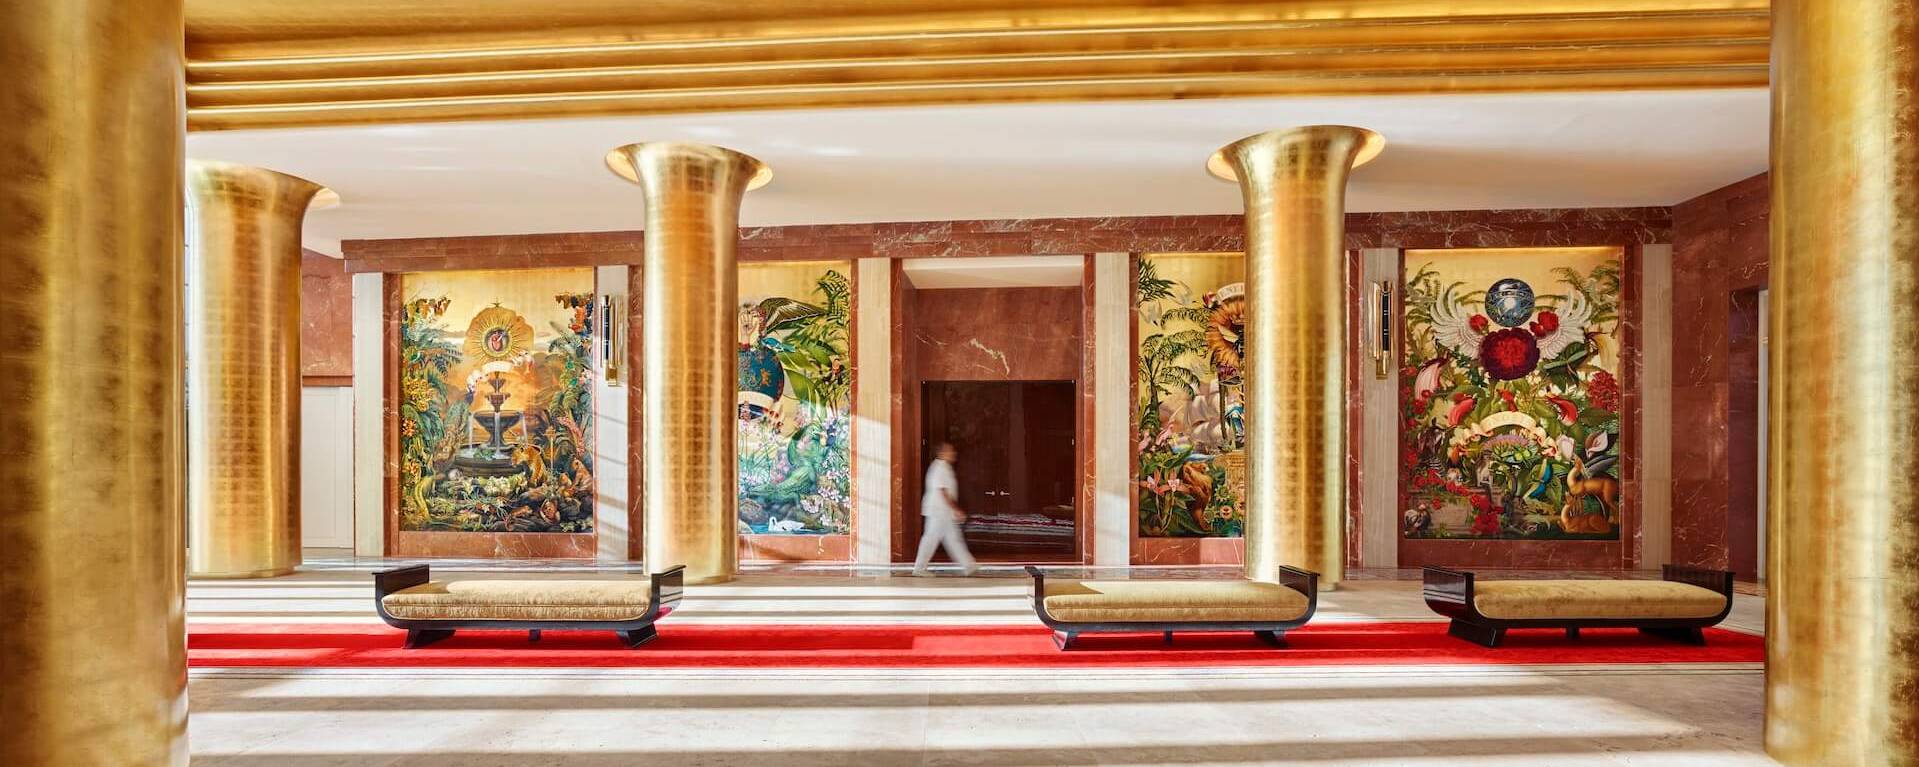 long lobby hallway with golden columns